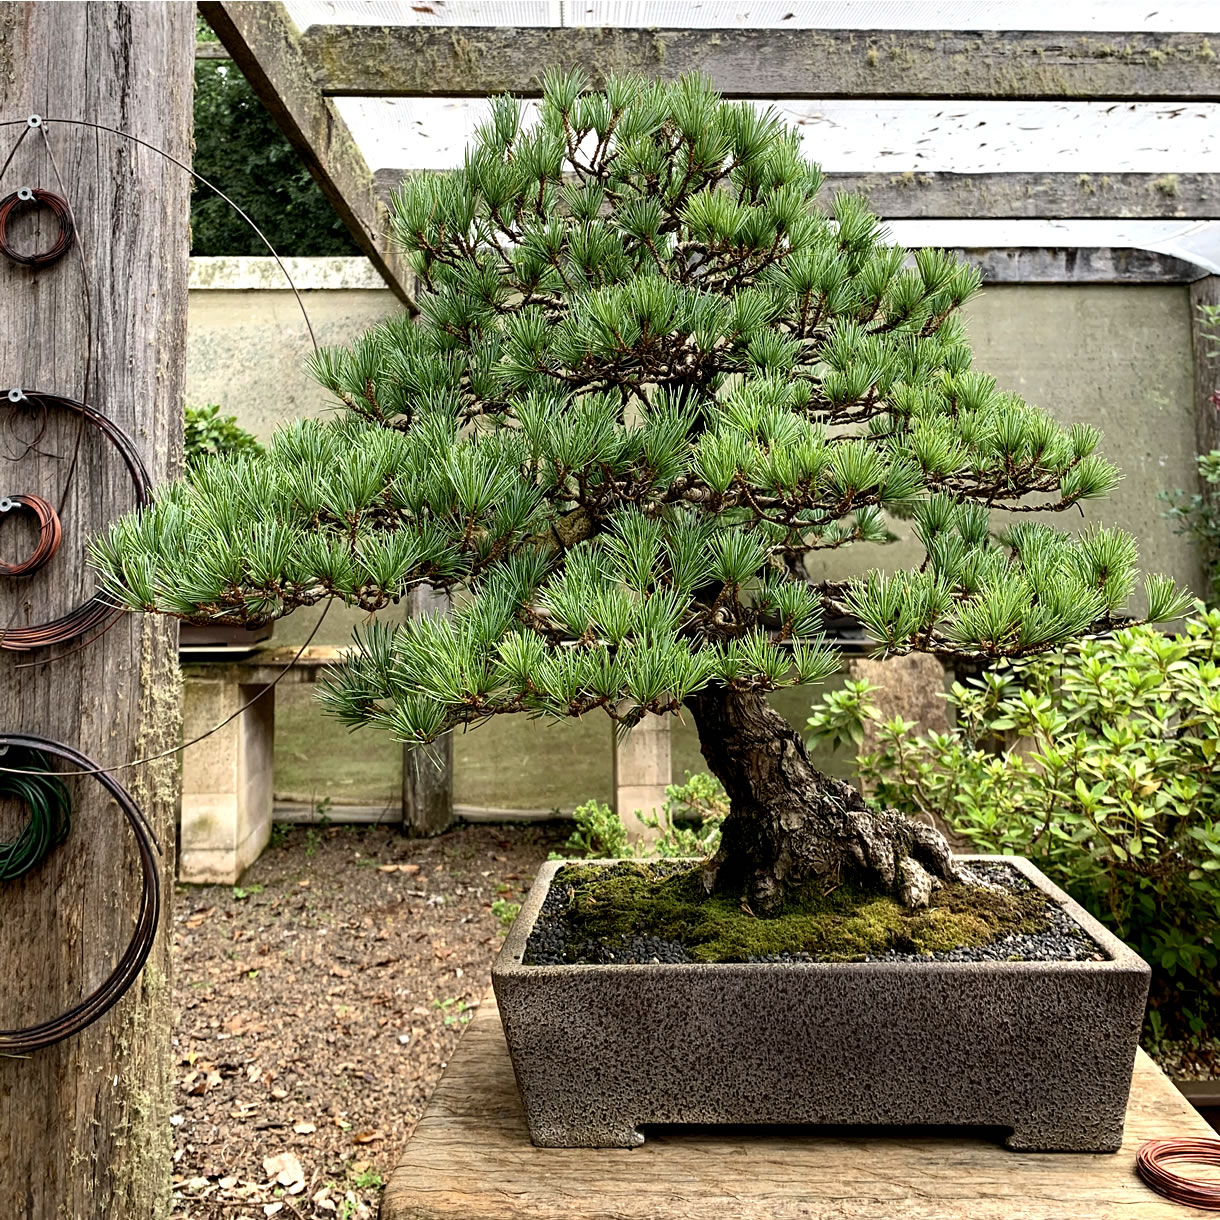 goyo matsu australian bonsai gallery 39